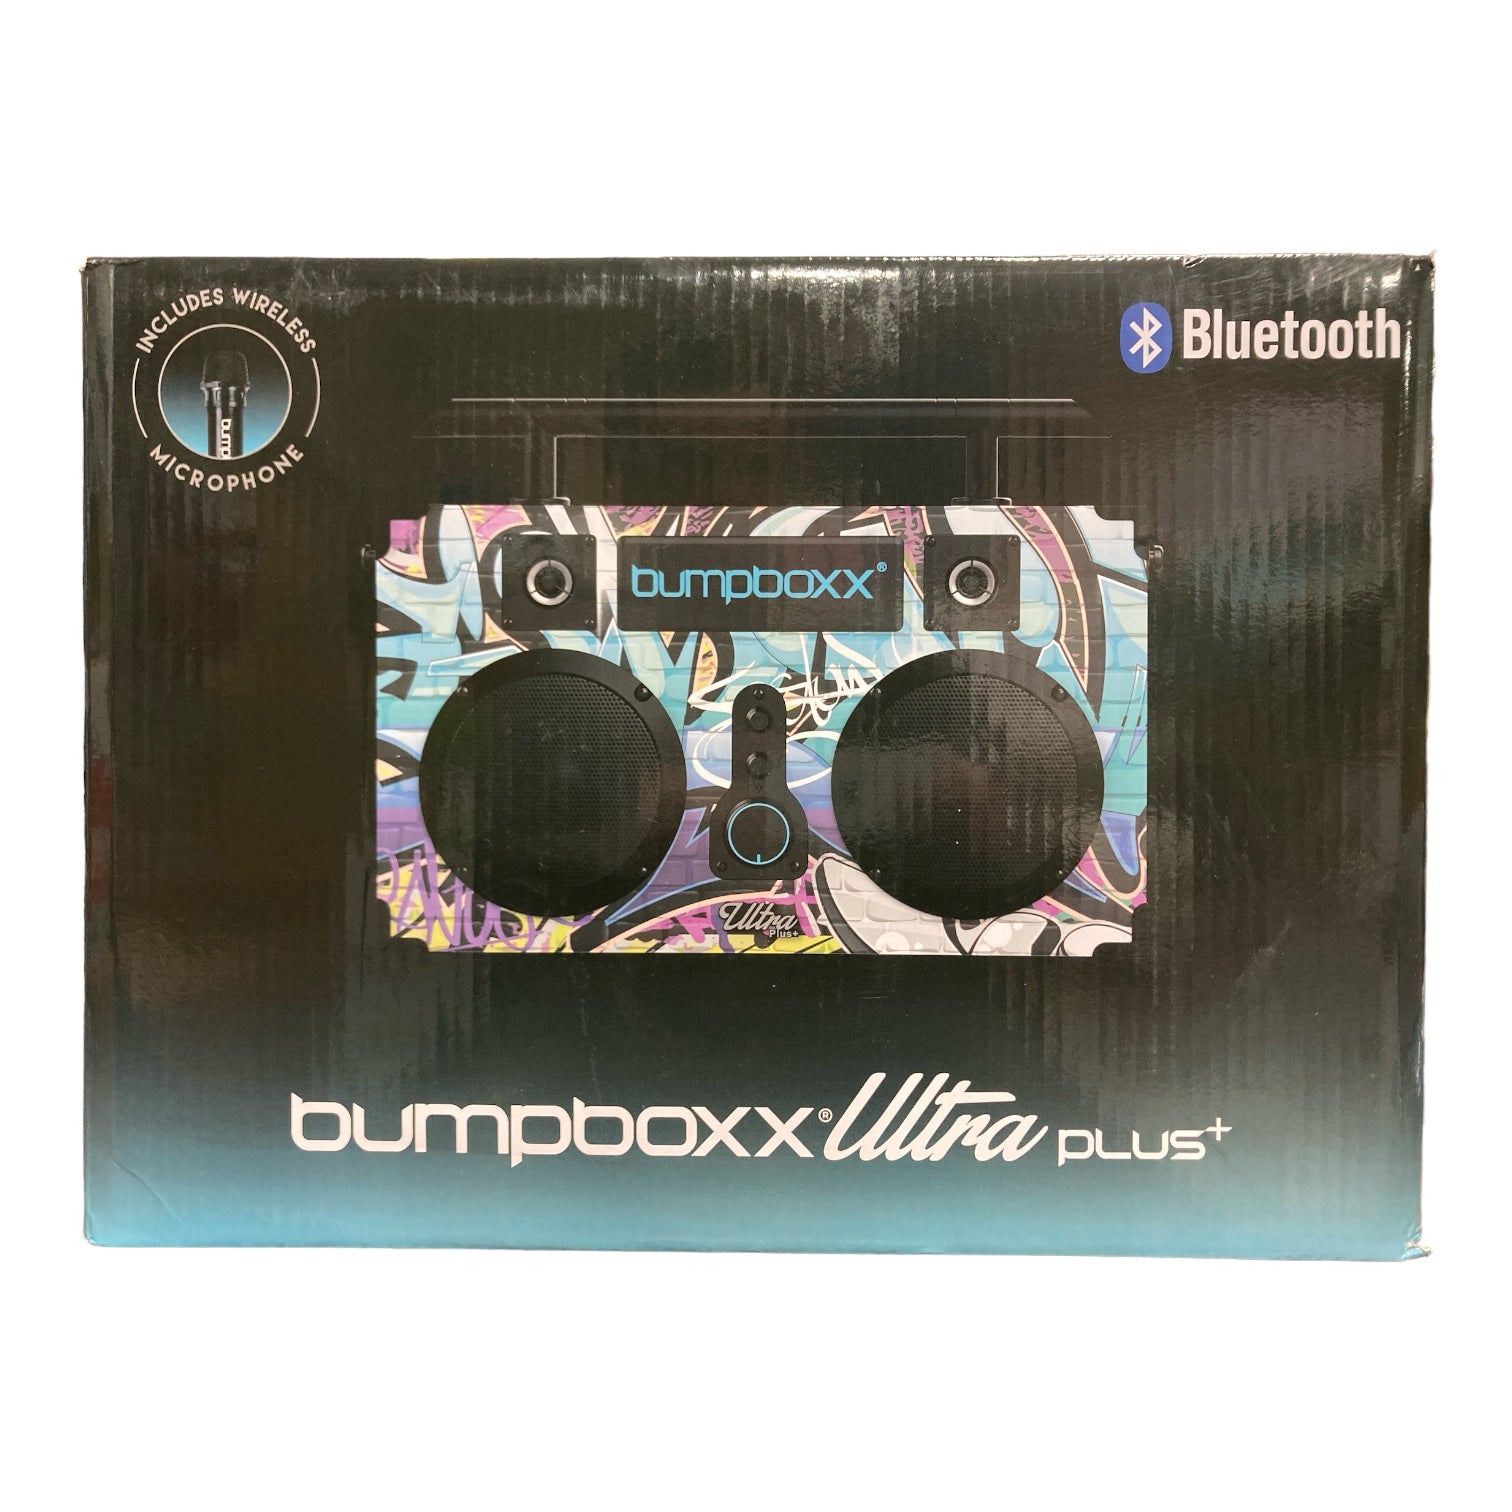 Bumpboxx Ultra Plus+ Graffiti Bluetooth Boombox w/ Microphone